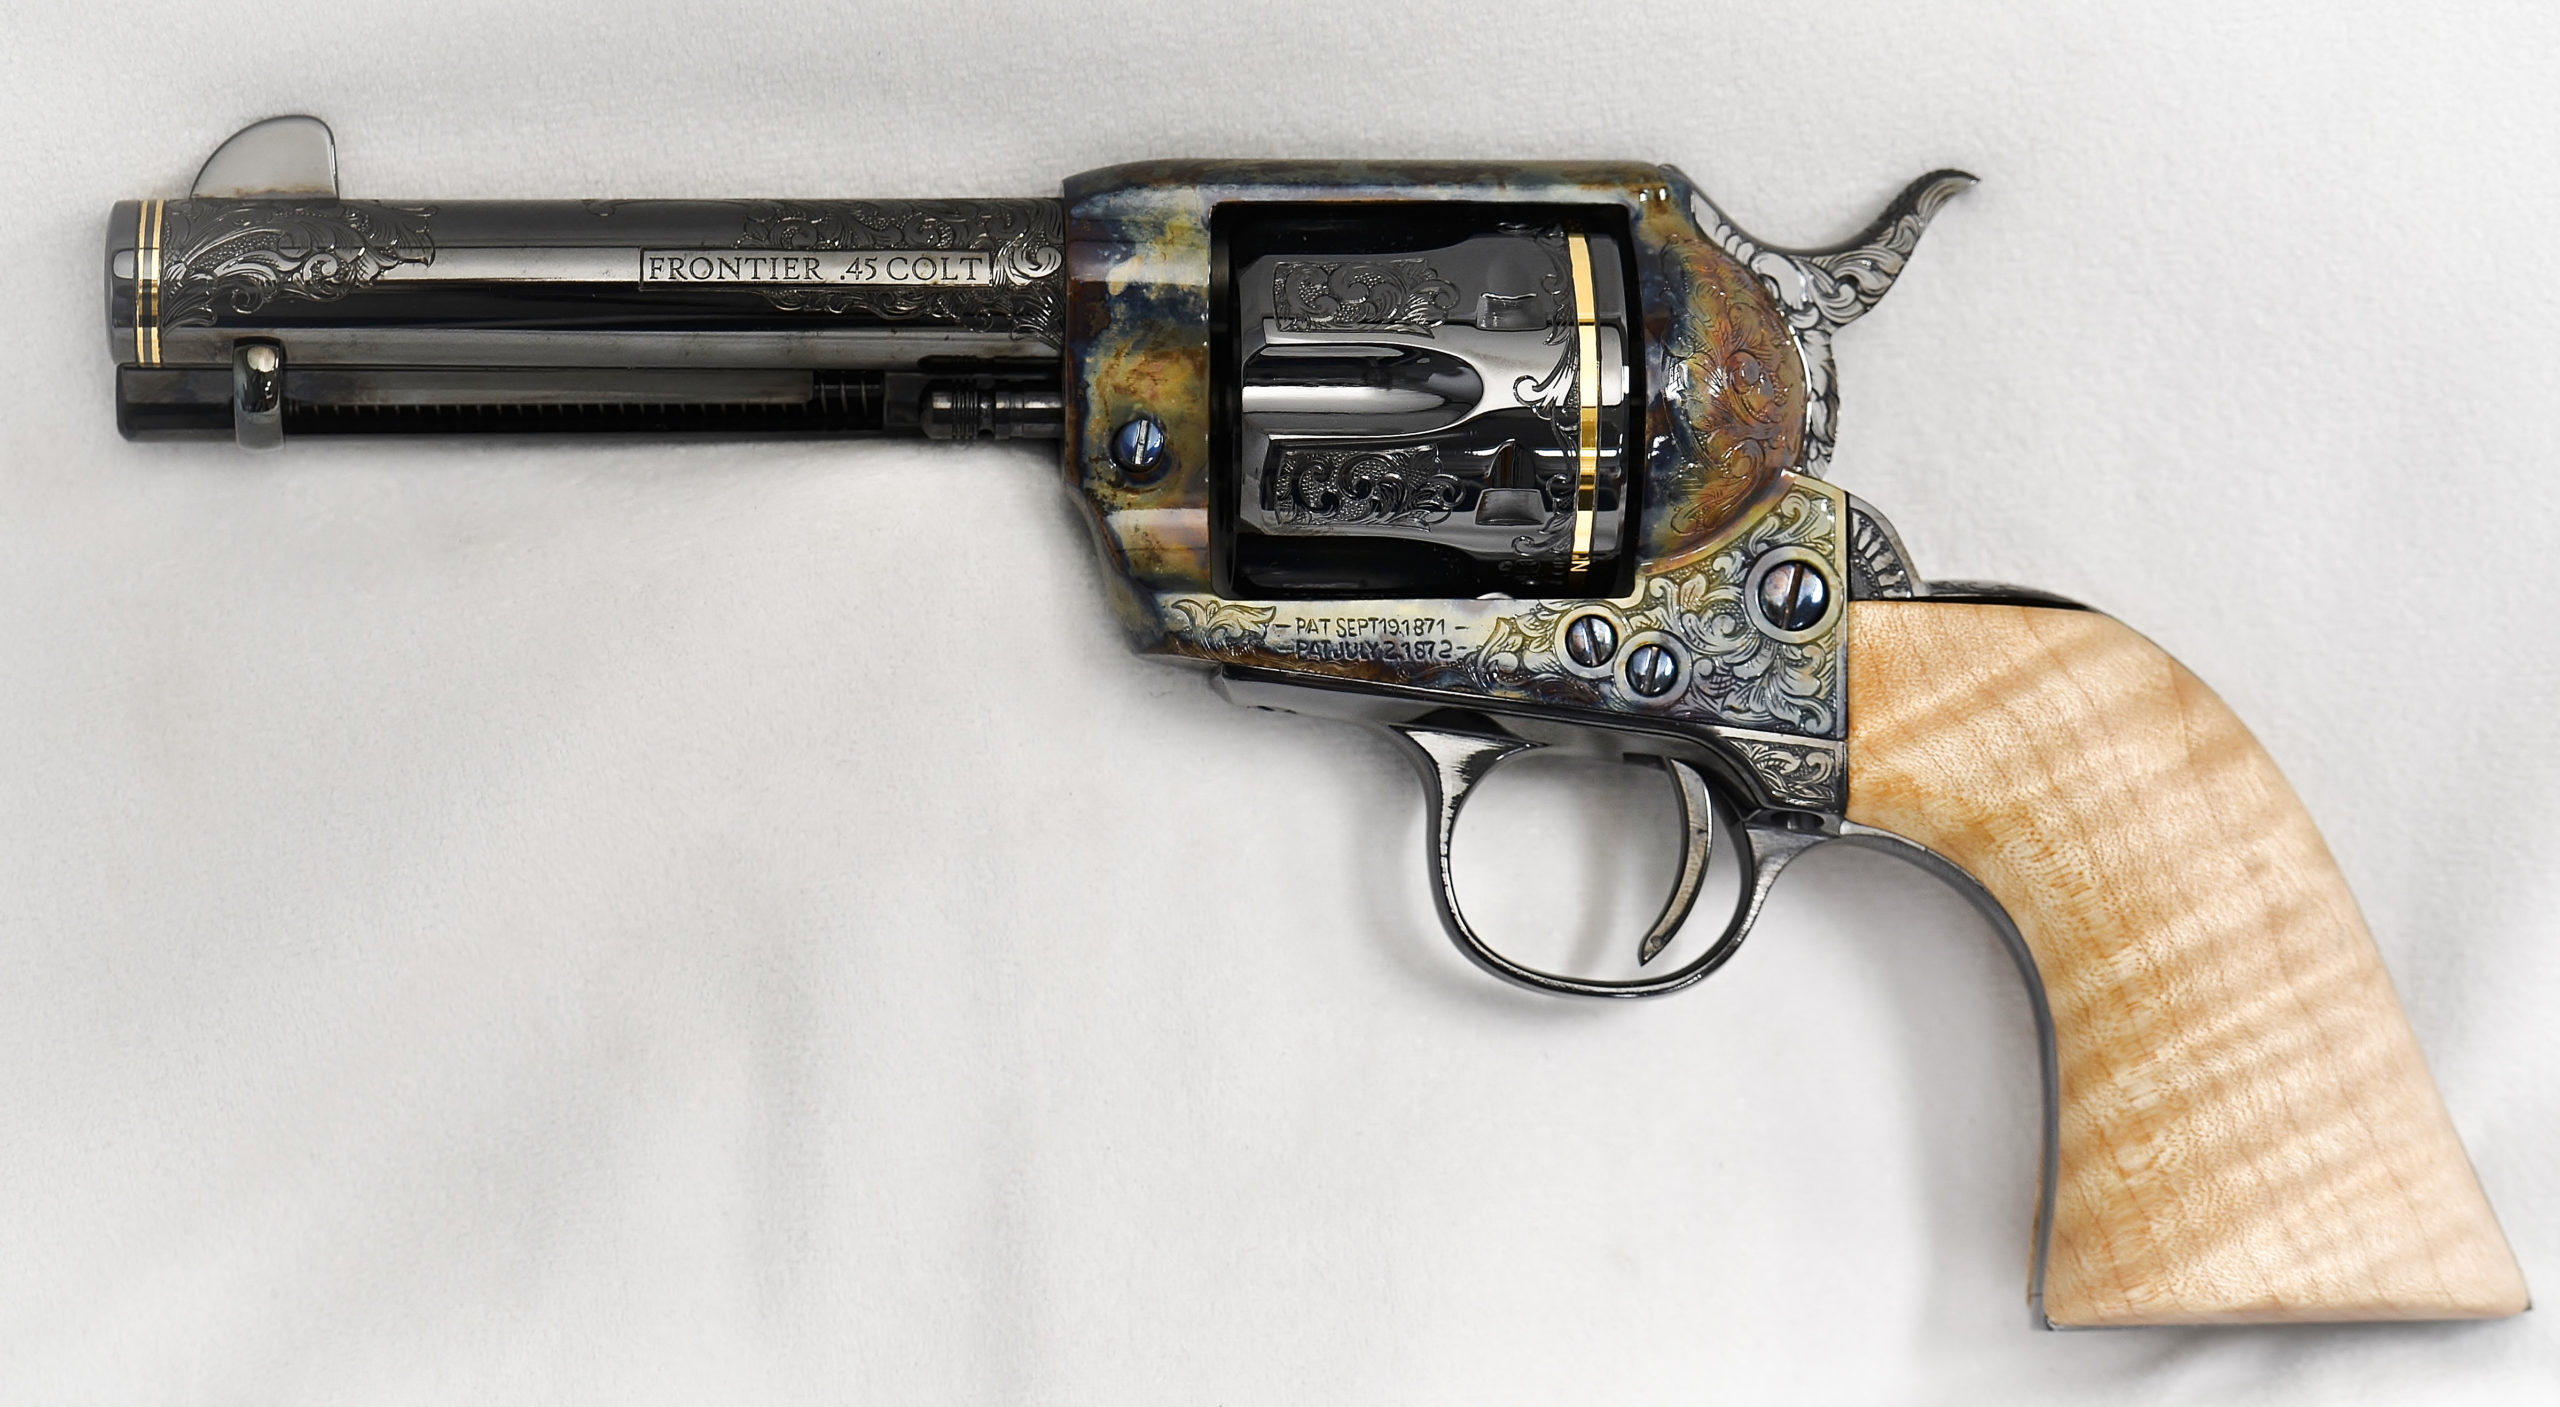 Celebrating the 45th Anniversary of American Handgunner